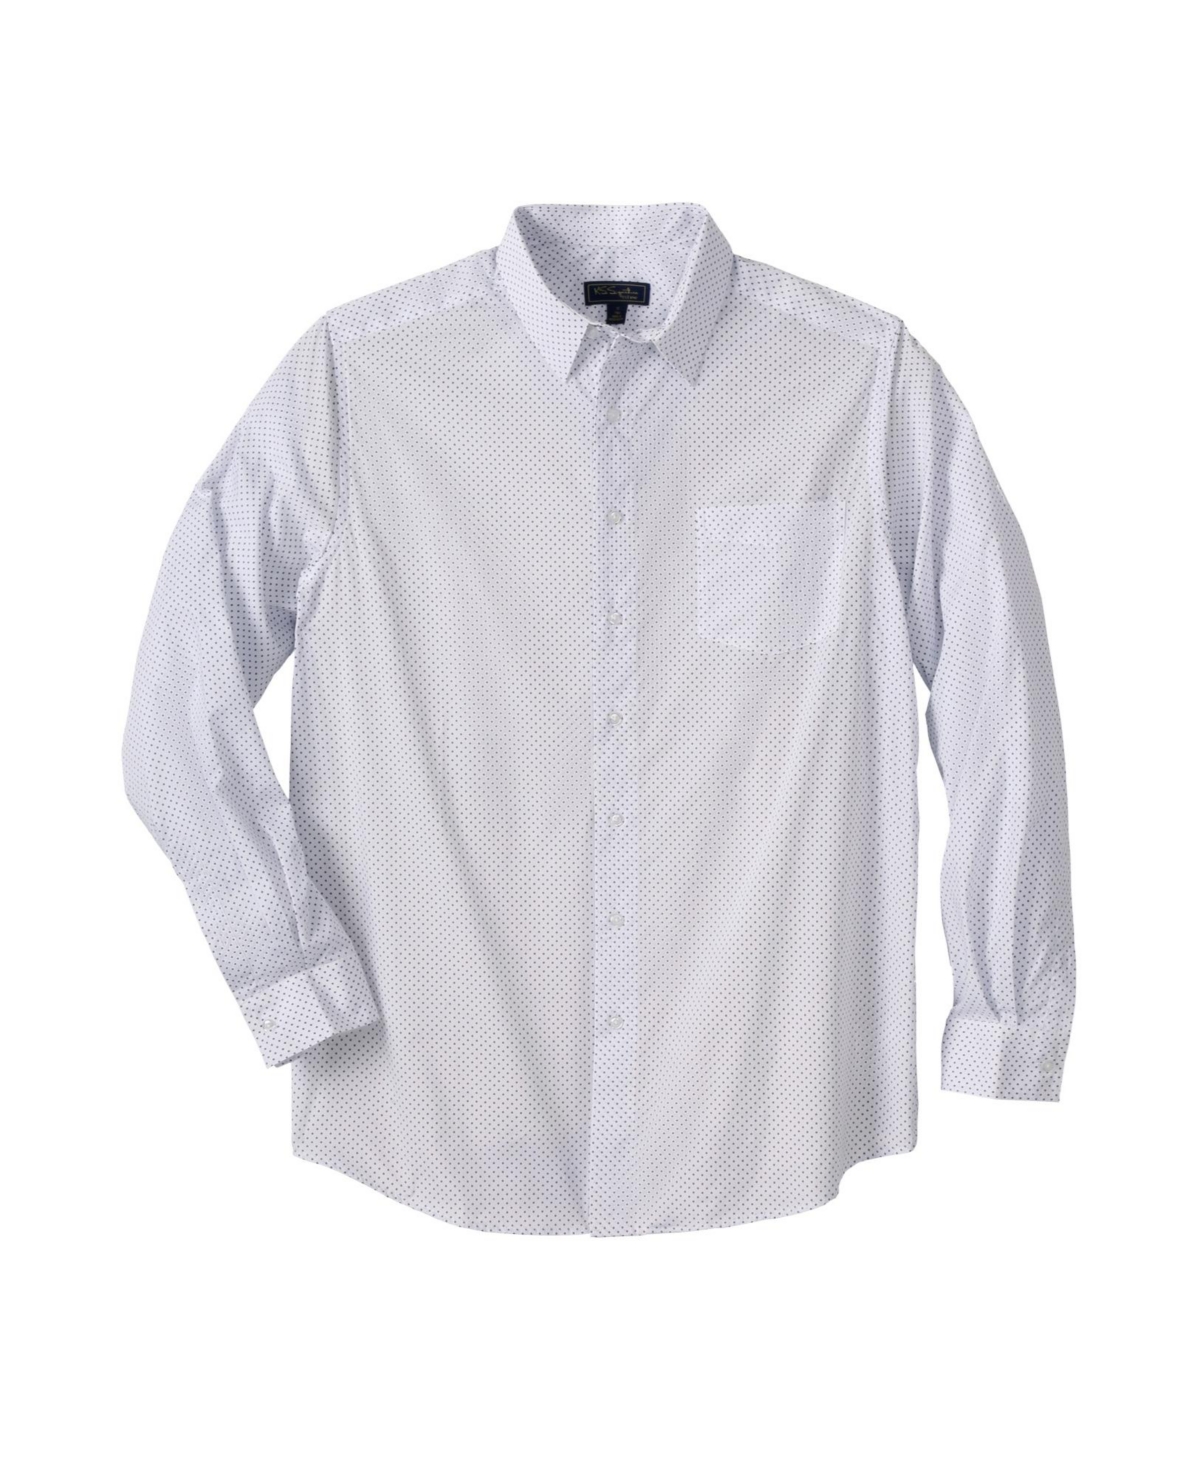 Big & Tall Ks Signature Collection Wrinkle-Free Long-Sleeve Dress Shirt - White navy pindot